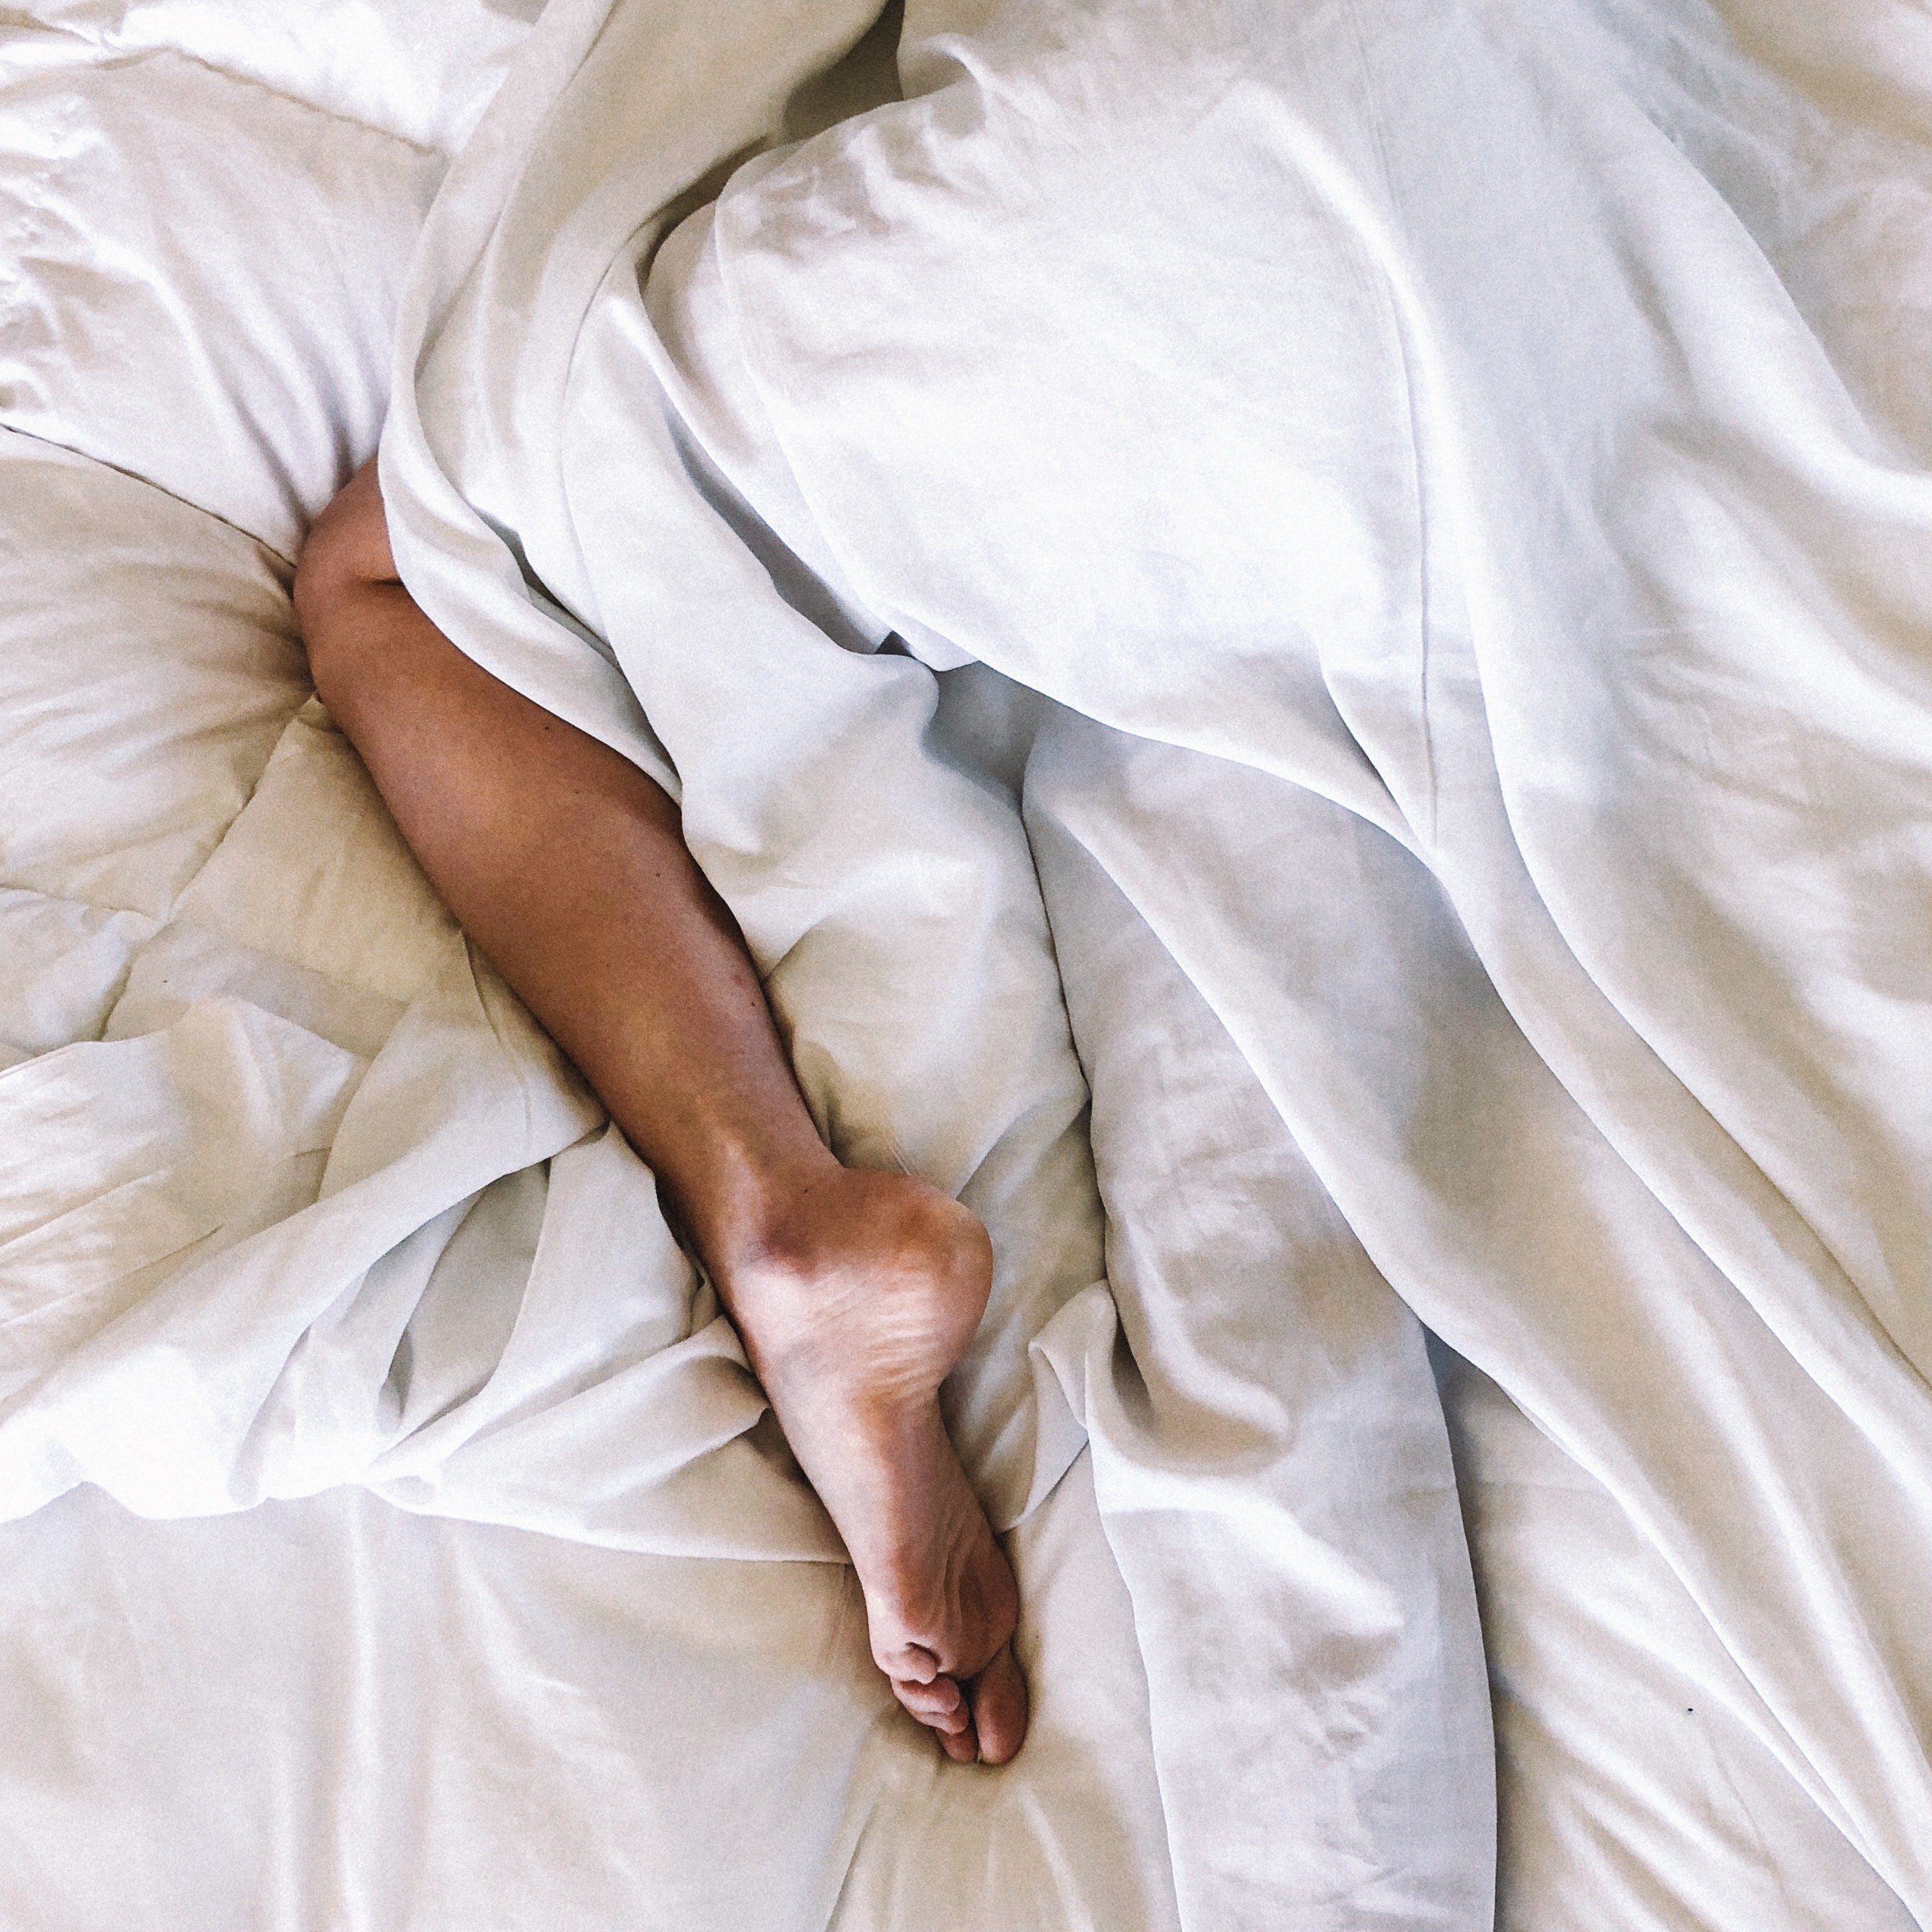 Tips For Good Sleep